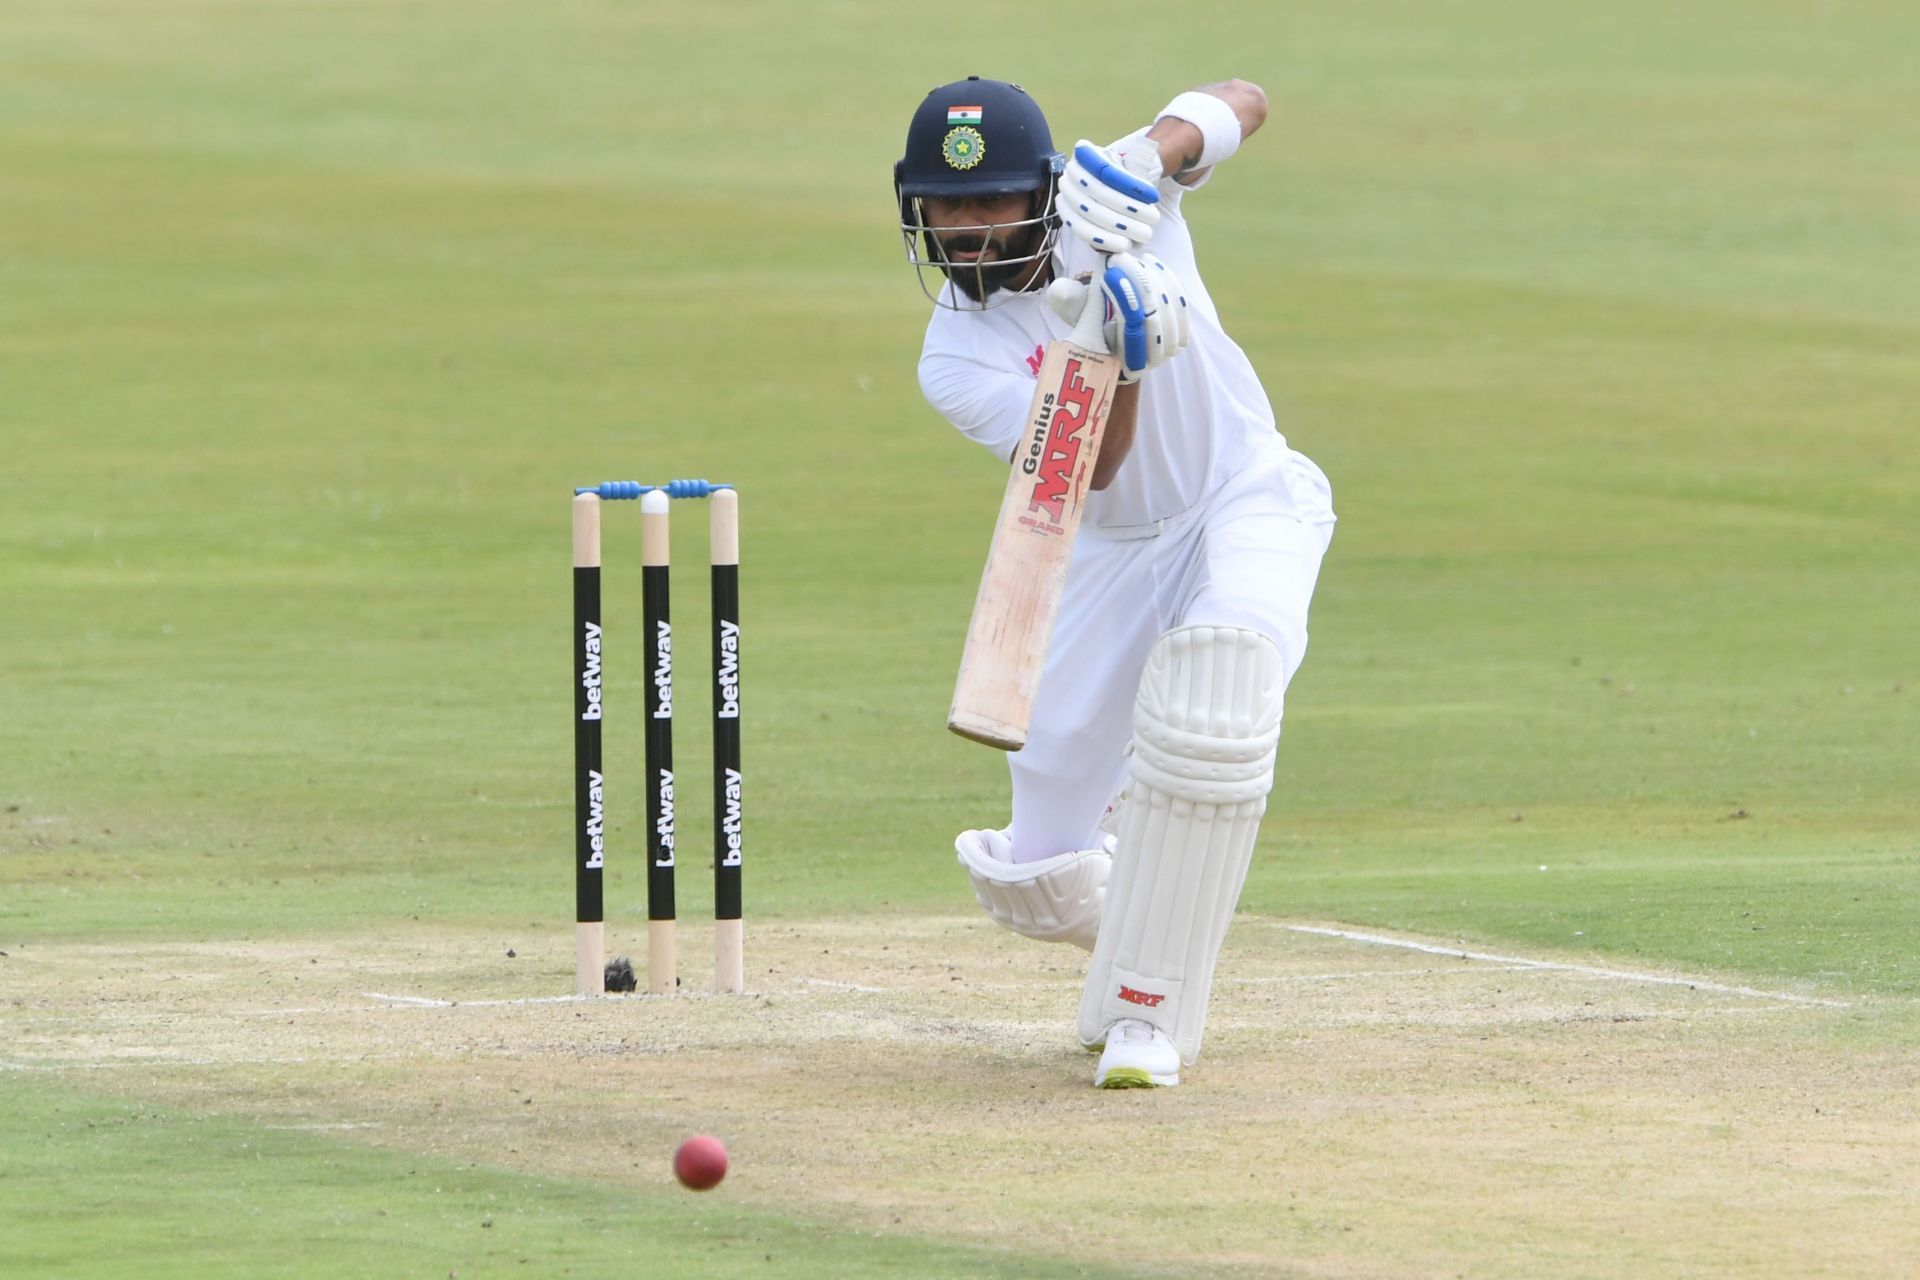 Virat Kohli is searching for big runs in international cricket